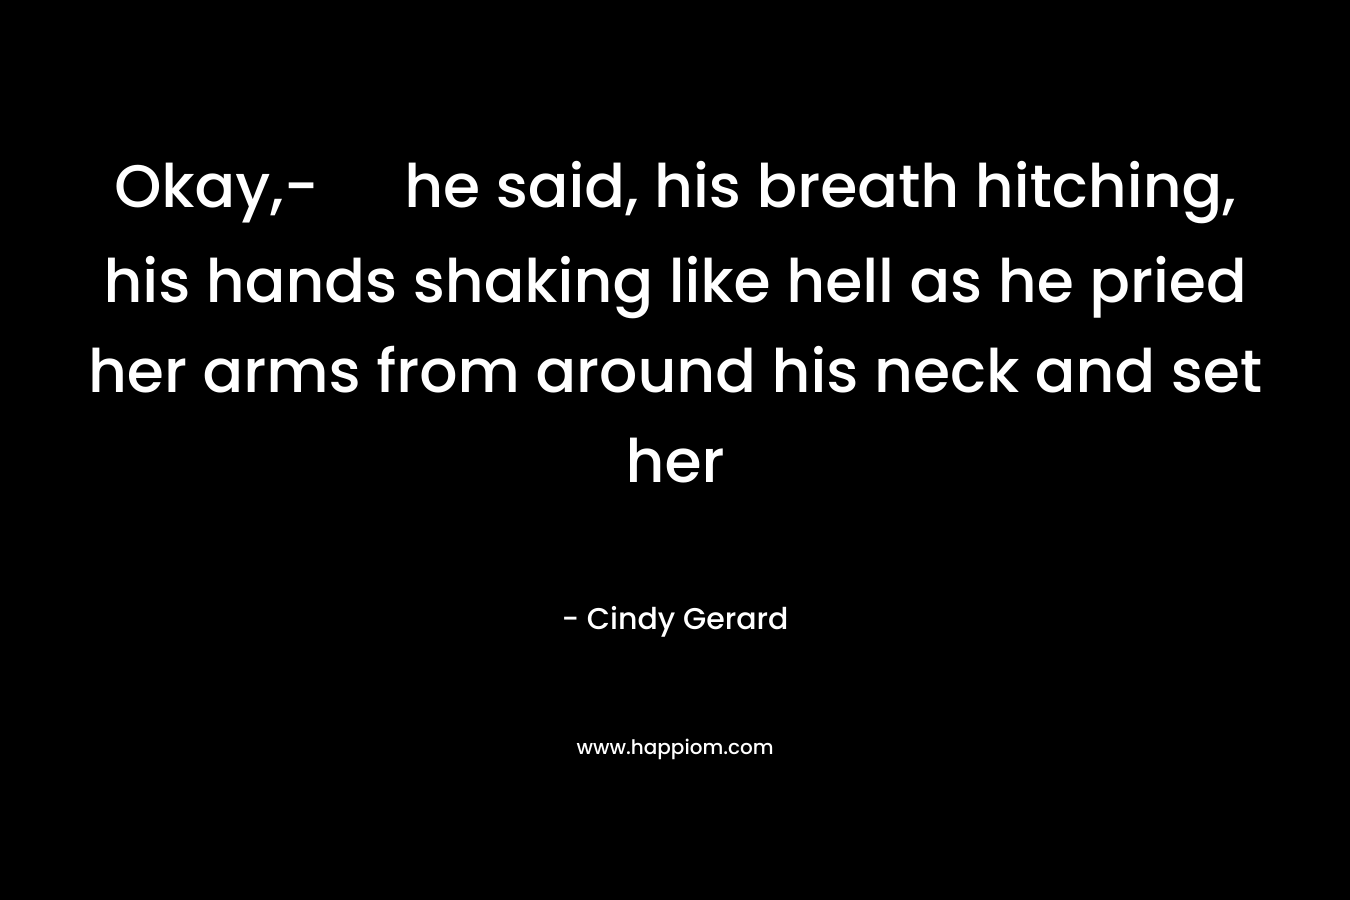 Okay,- he said, his breath hitching, his hands shaking like hell as he pried her arms from around his neck and set her – Cindy Gerard